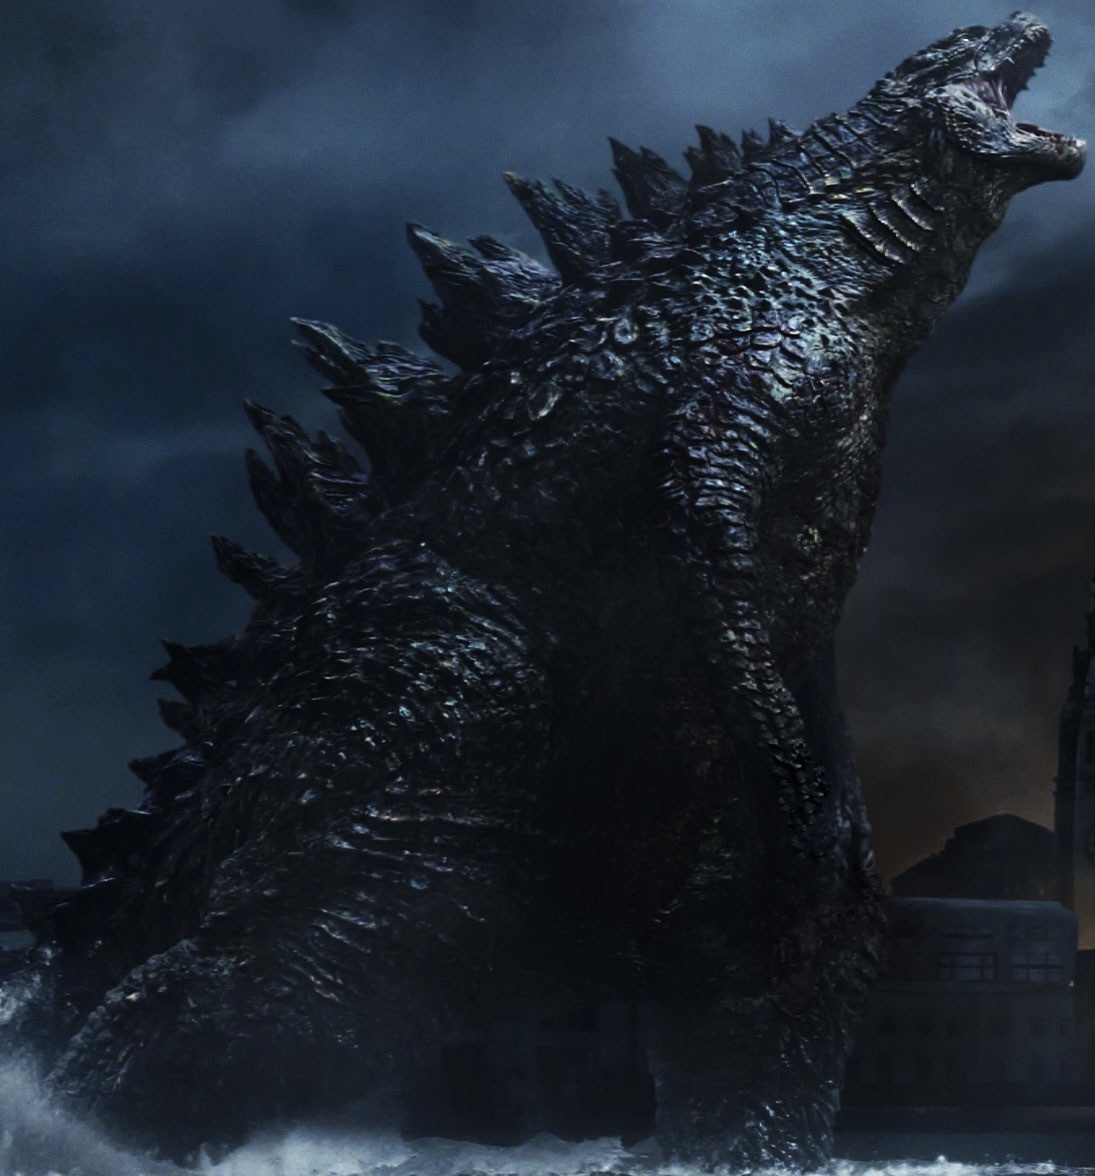 EX Atomic Shot #2: Godzilla Save the Earth — Charged Shot